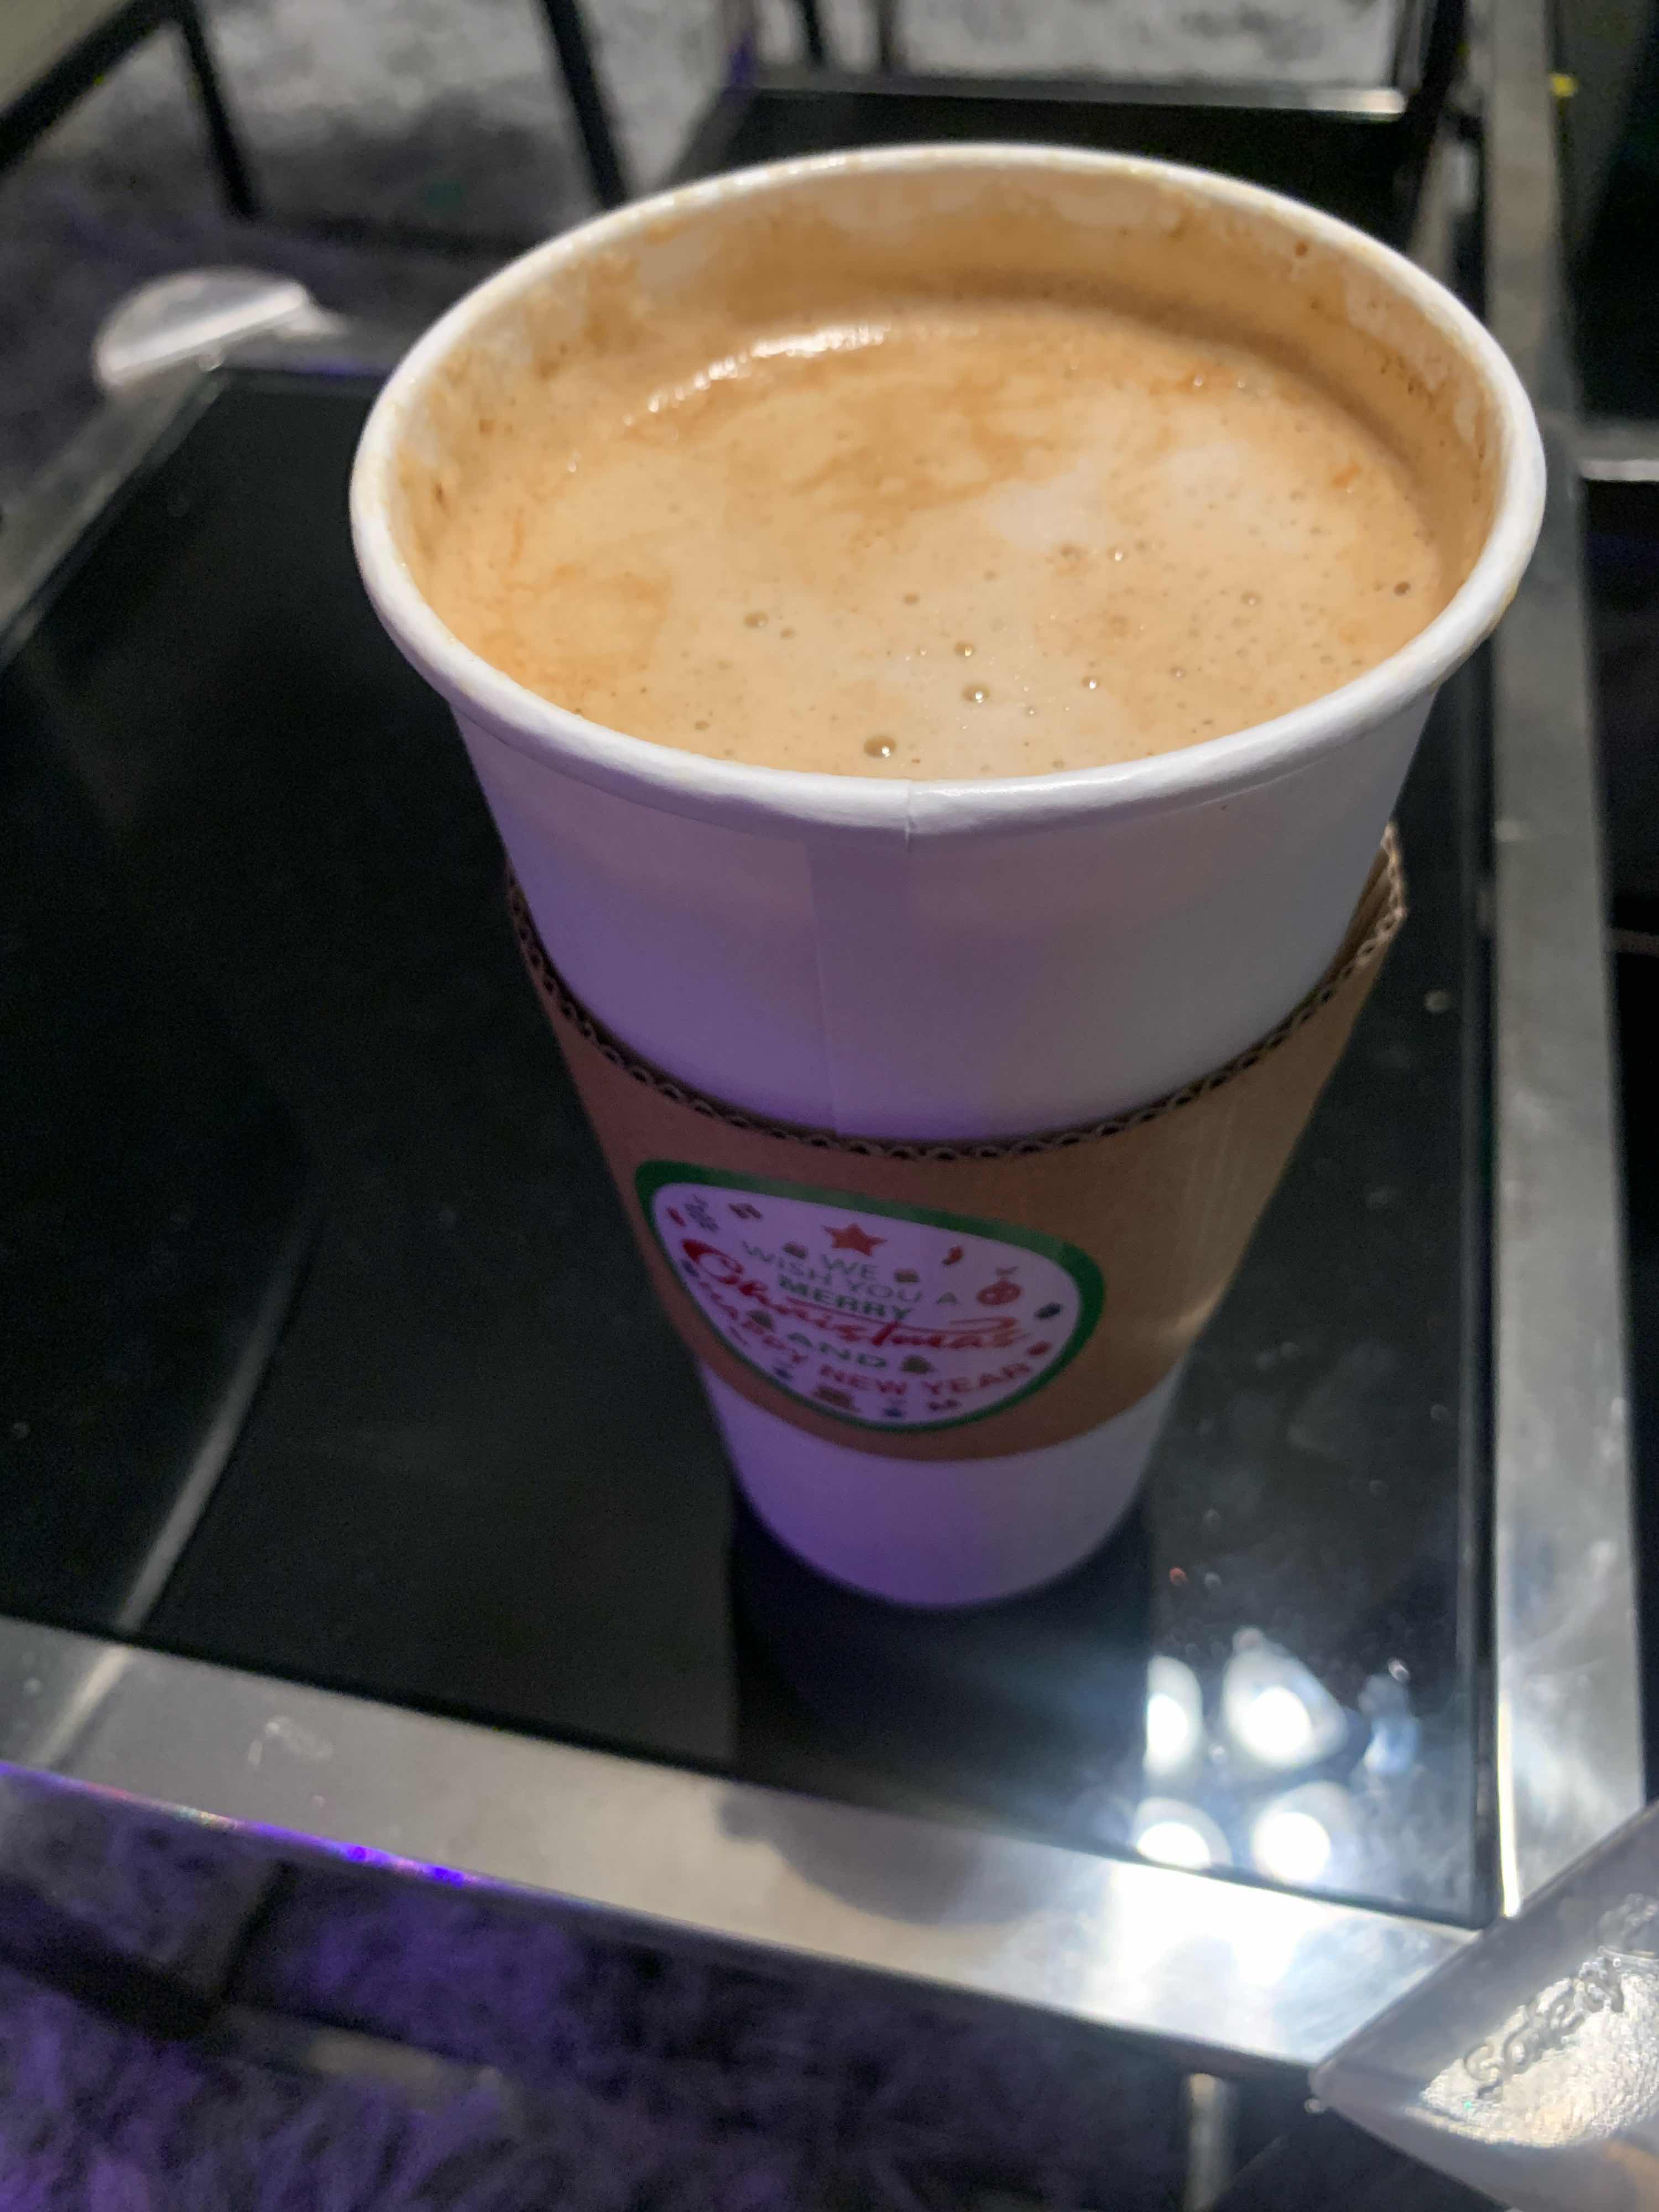 Starbucks Coffee One Ounce Espresso Latte Mermaid Shot Glasses